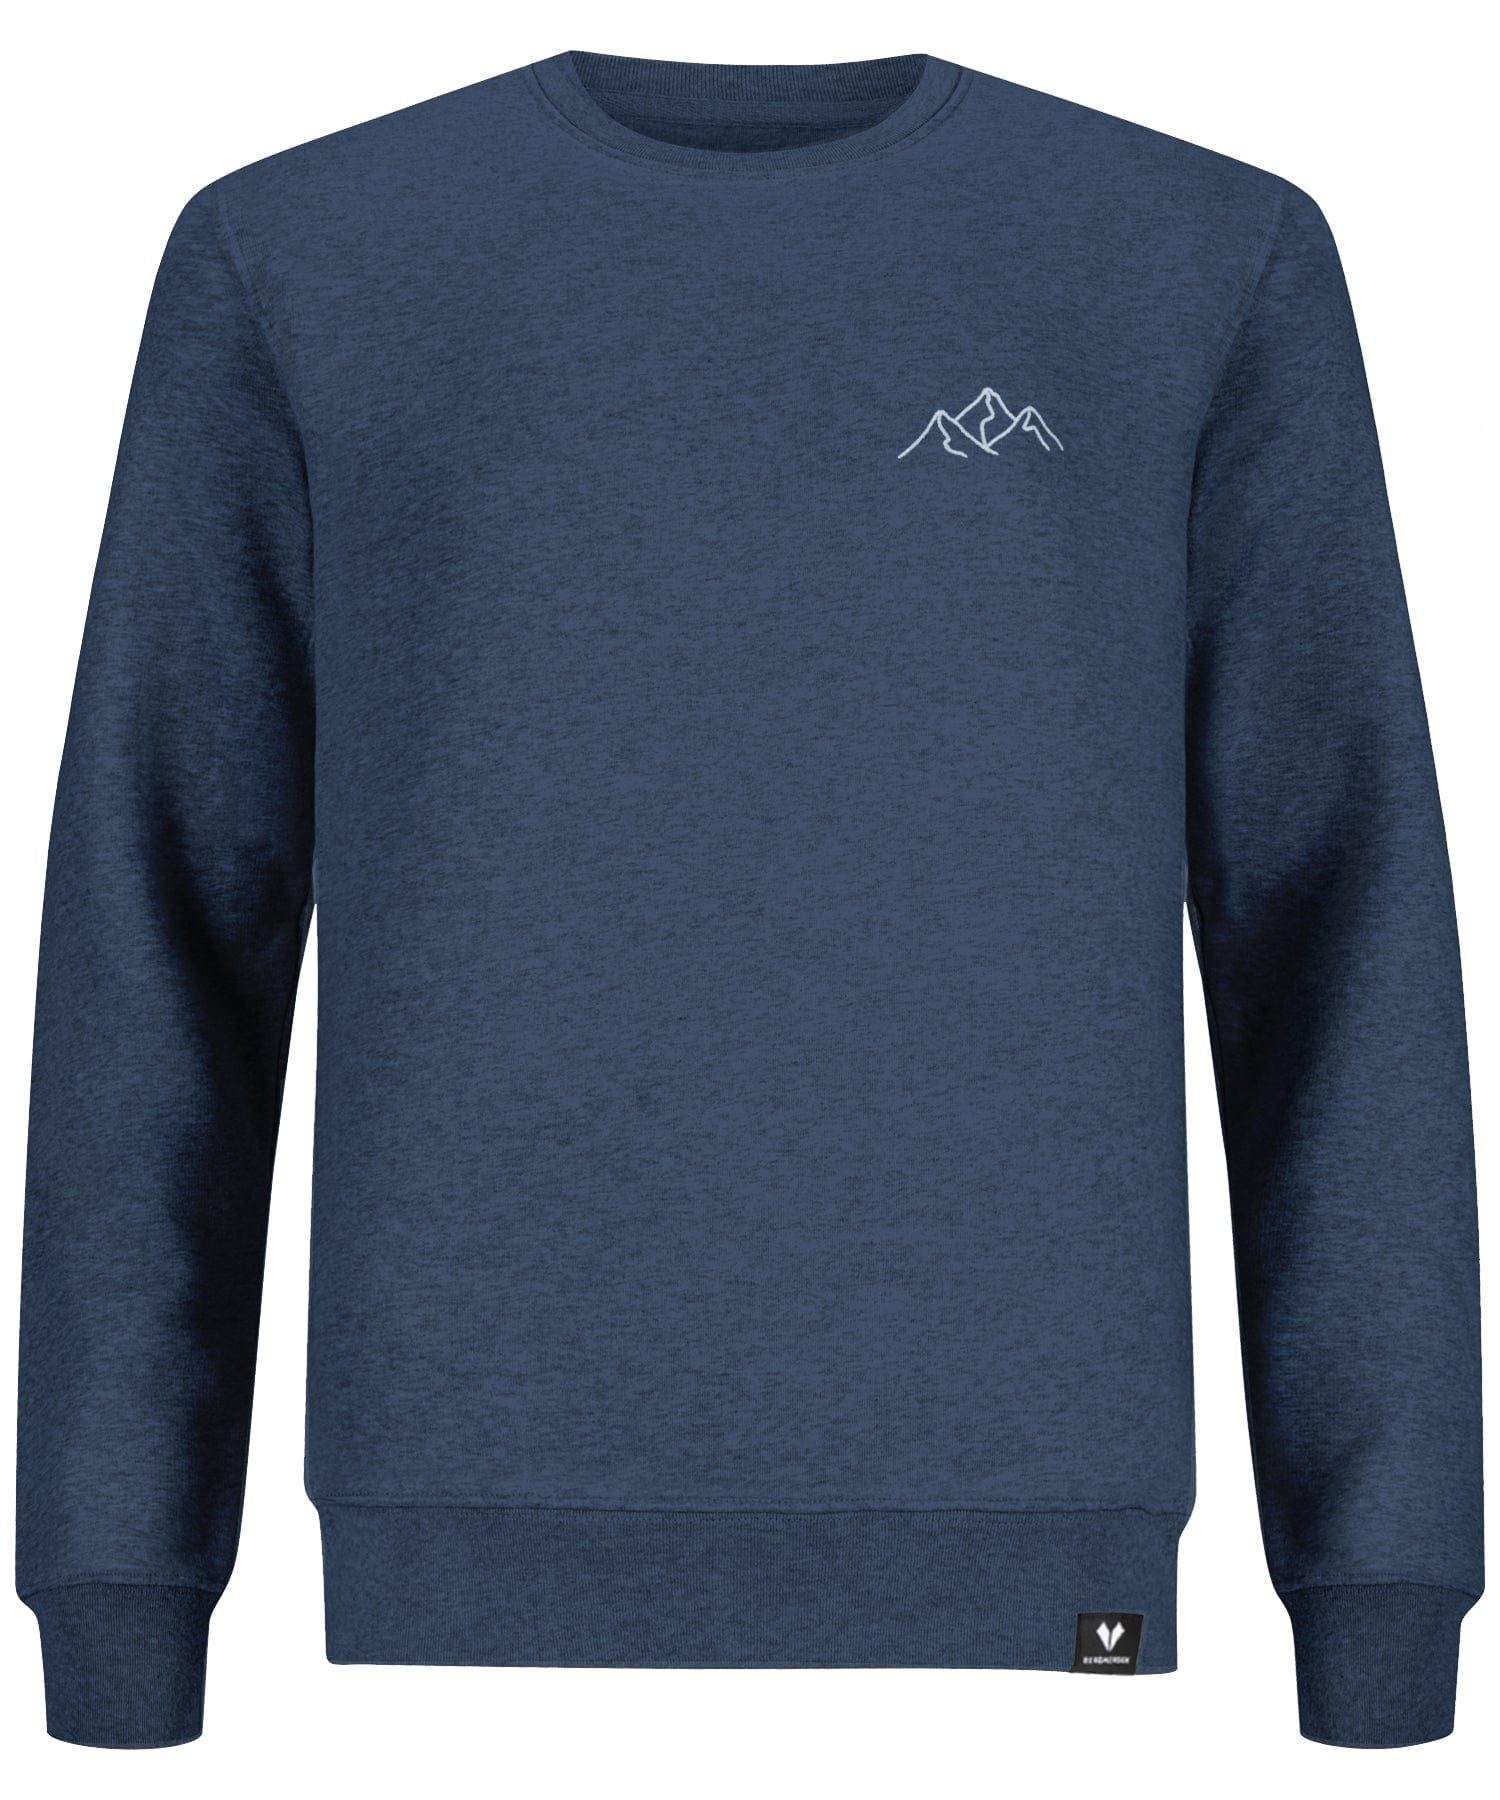 Bergsilhouette (Stick) - Unisex Premium Organic Sweatshirt